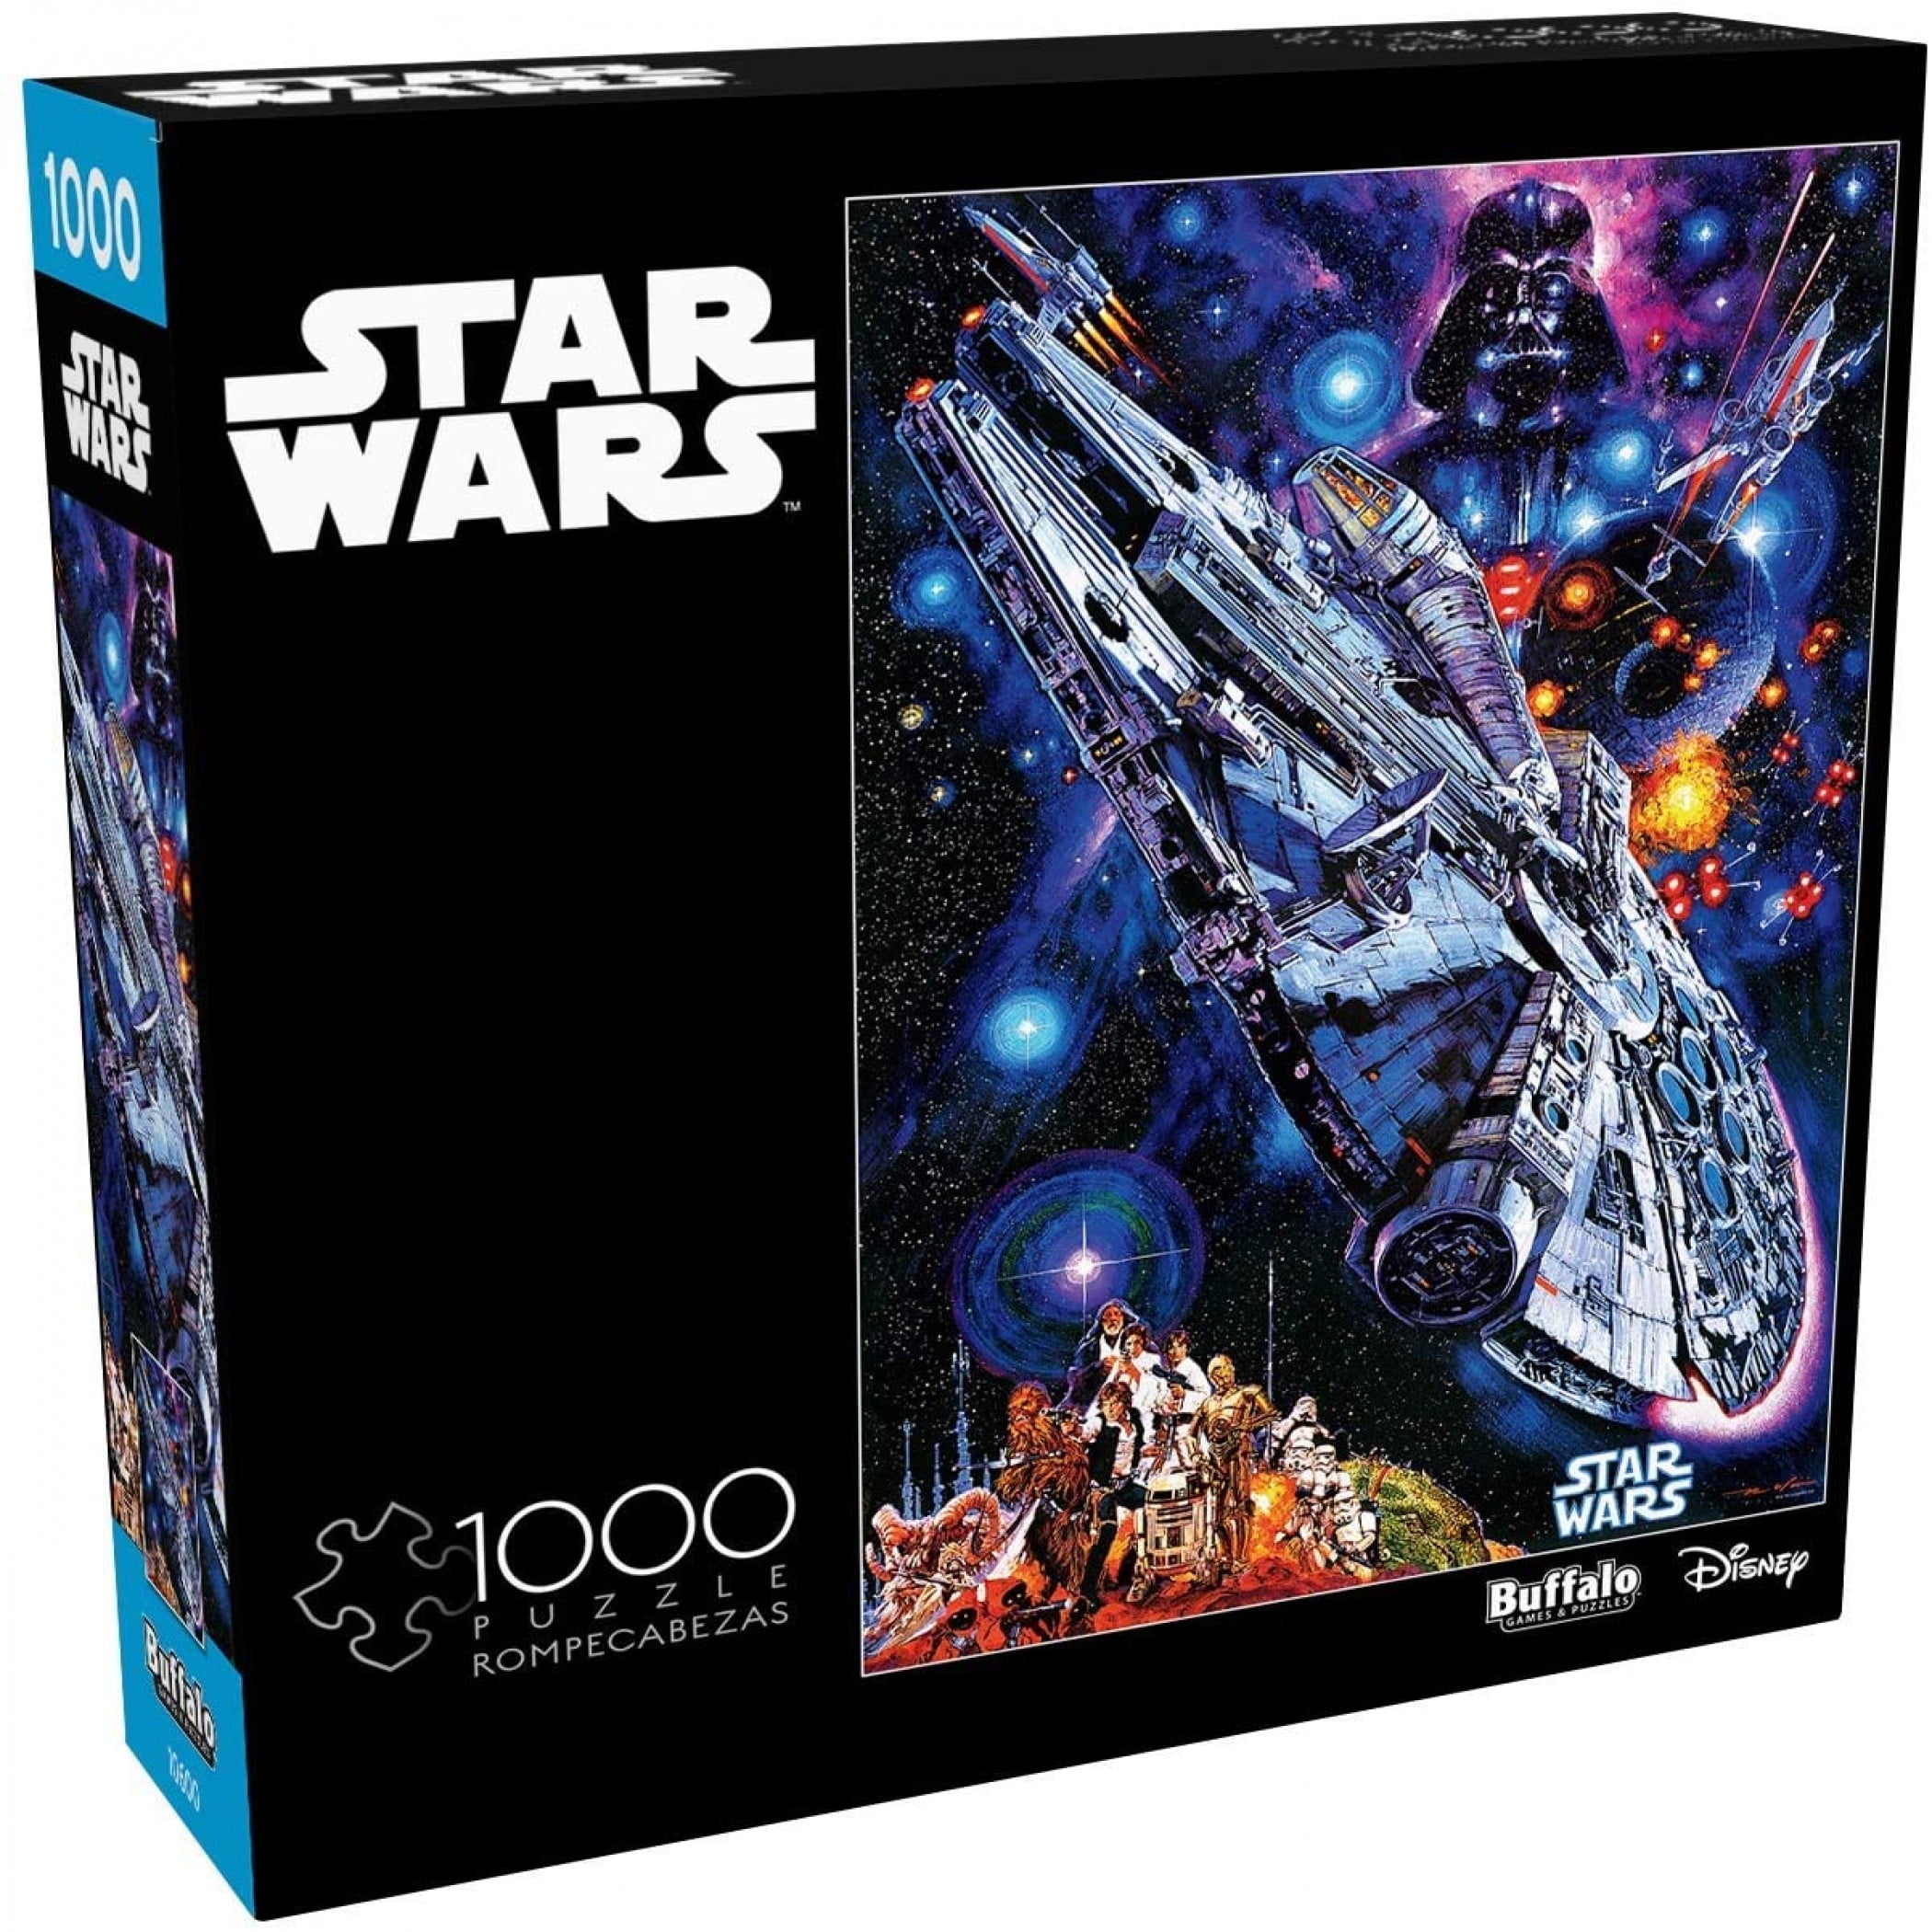 Star Wars Millennium Falcon Darth V Jigsaw Puzzle 1000 Pcs Buffalo Games Disney for sale online 